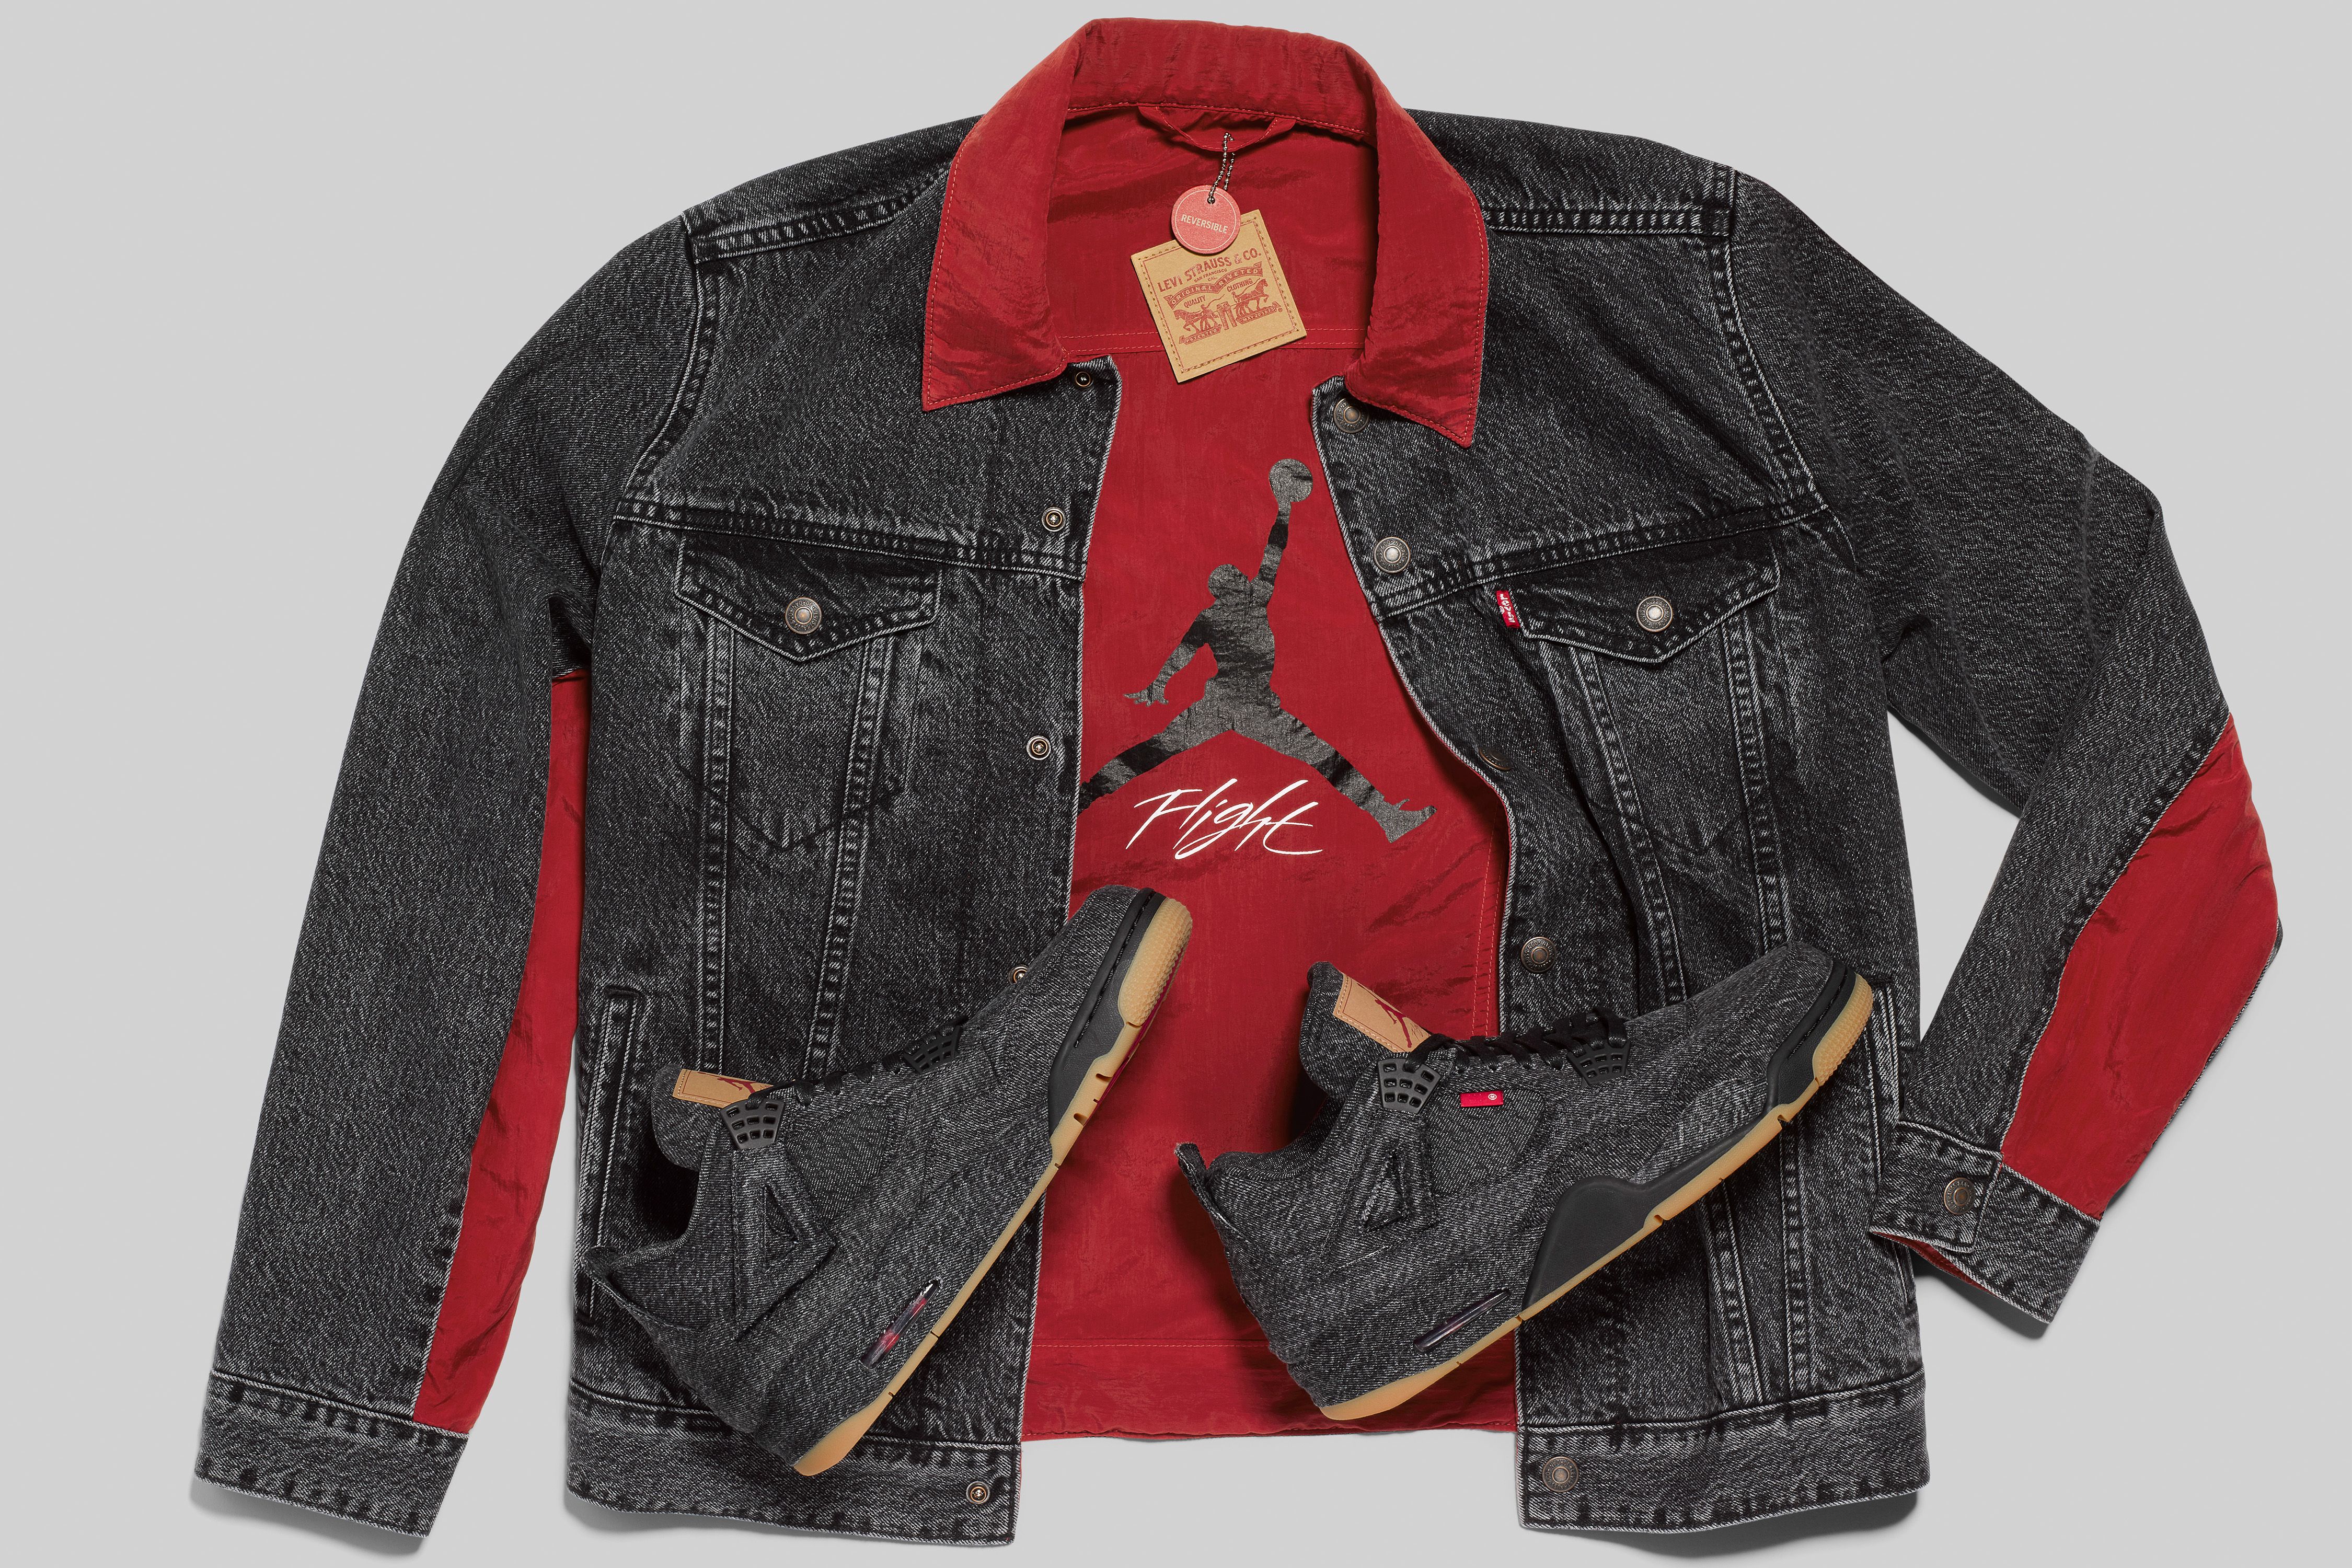 Jordan Brand Prove You Need a Summer Jacket